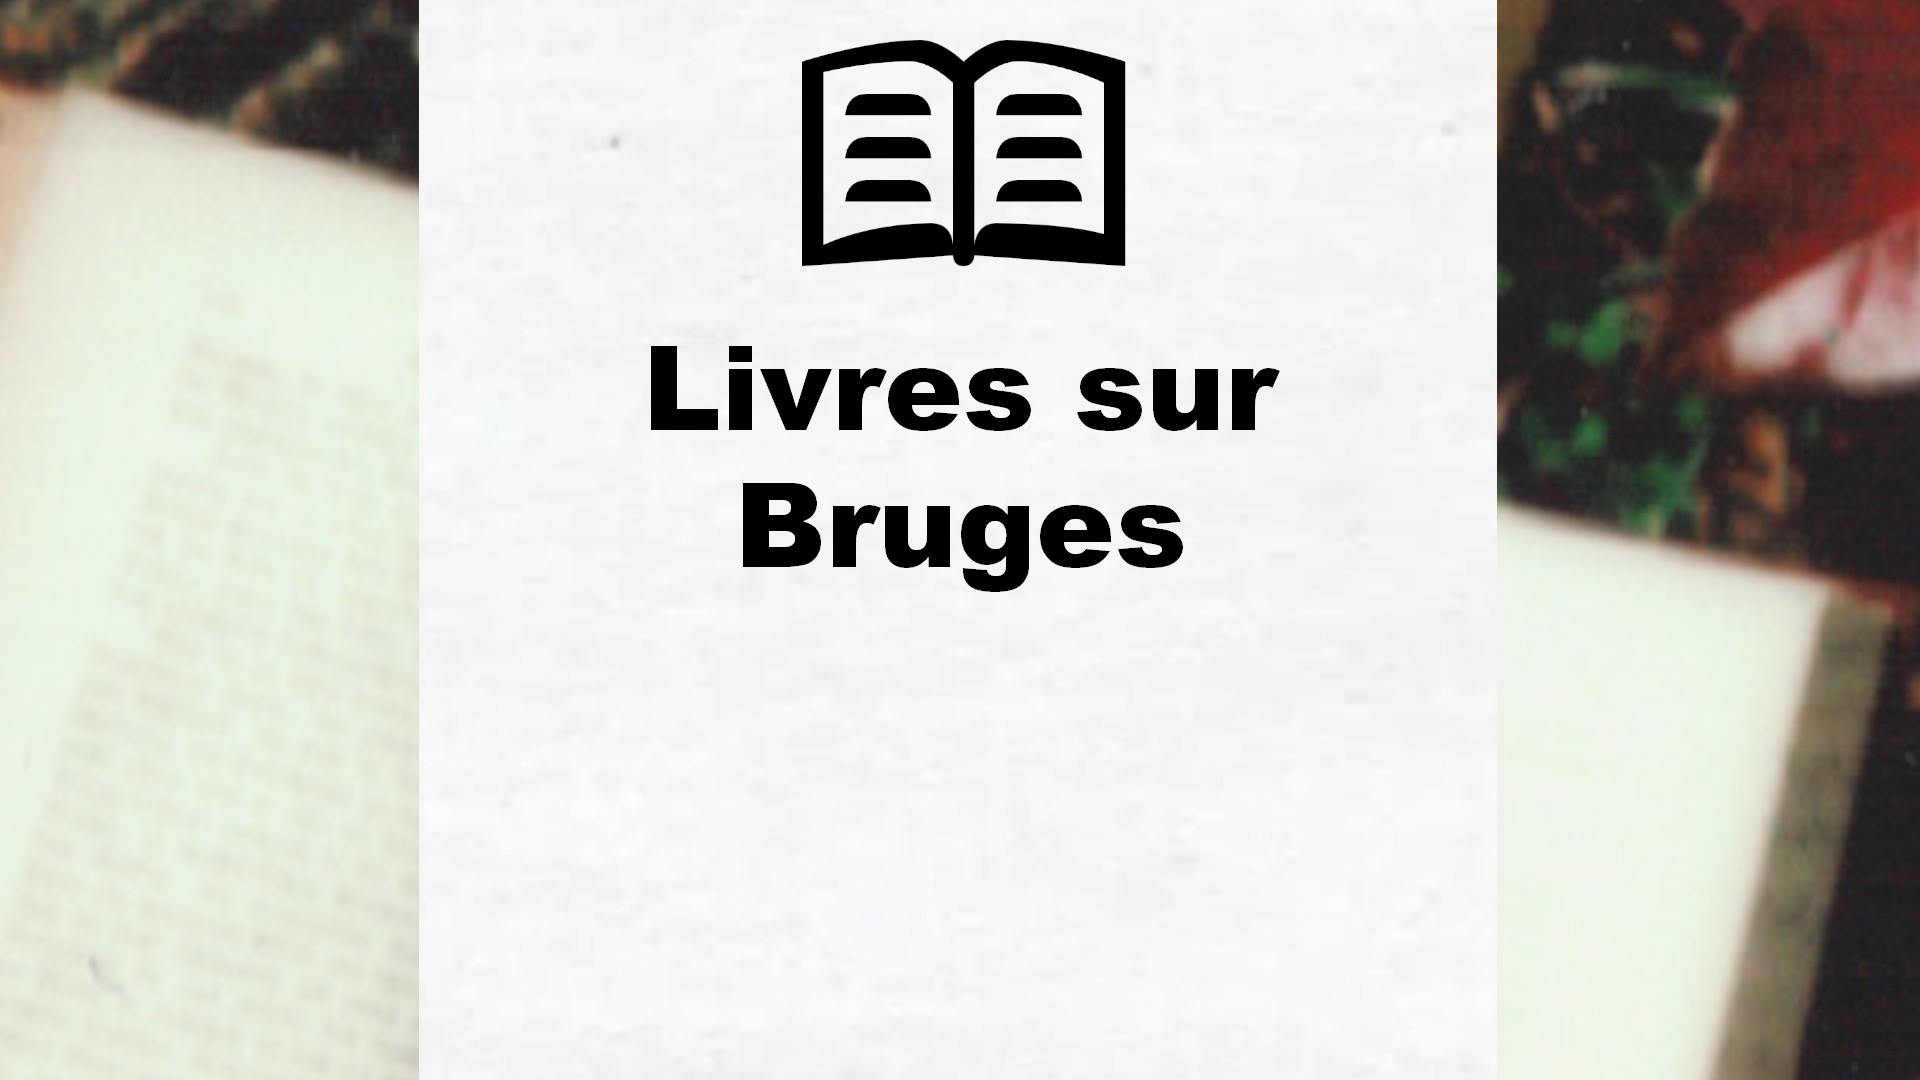 Livres sur Bruges